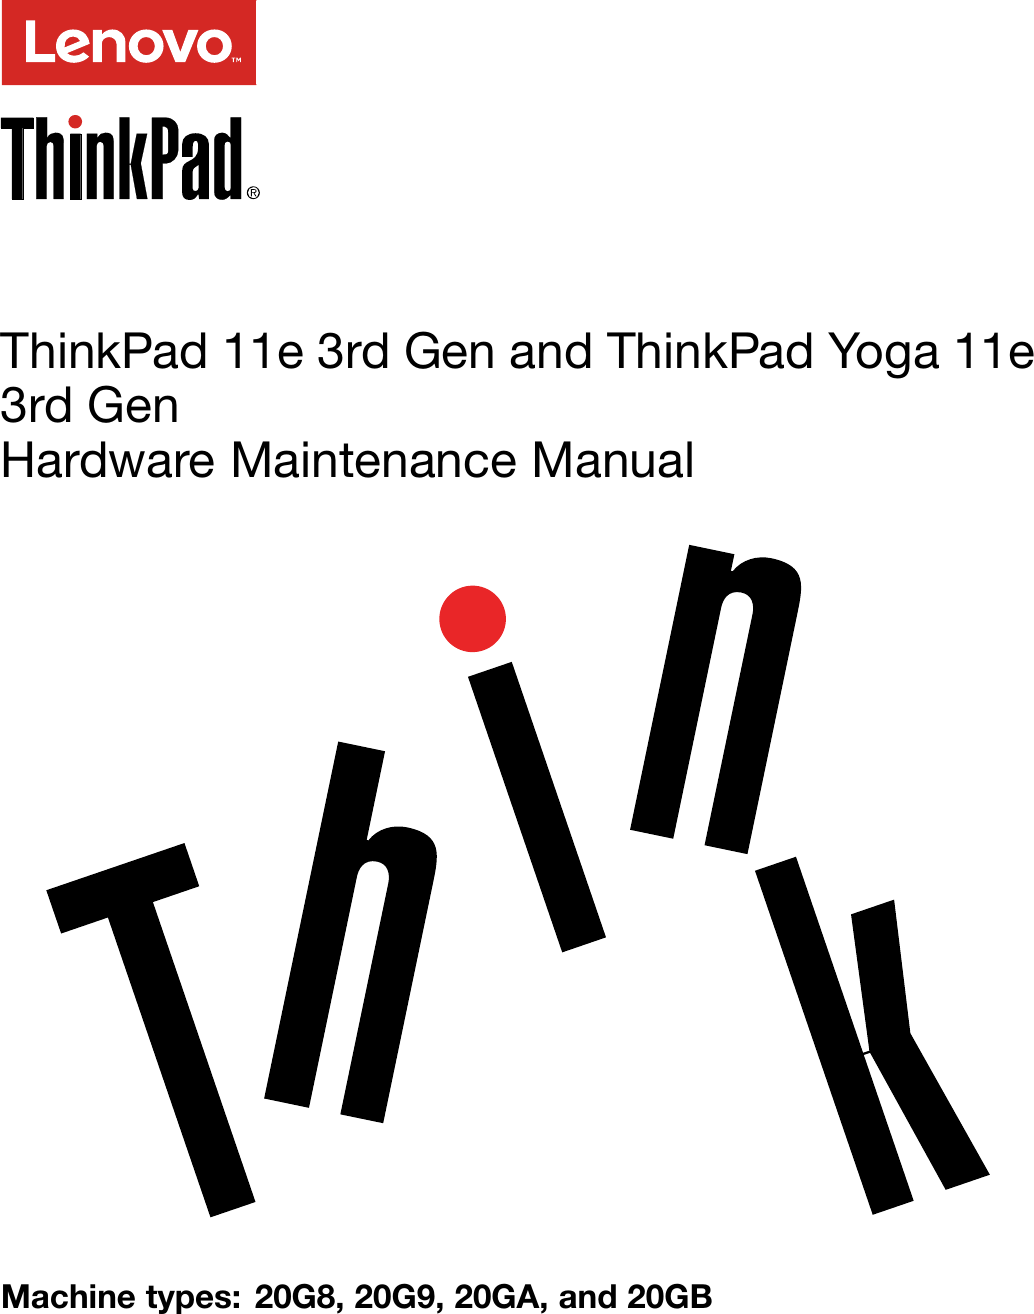 thinkpad hardware maintenance diskette version 1.73